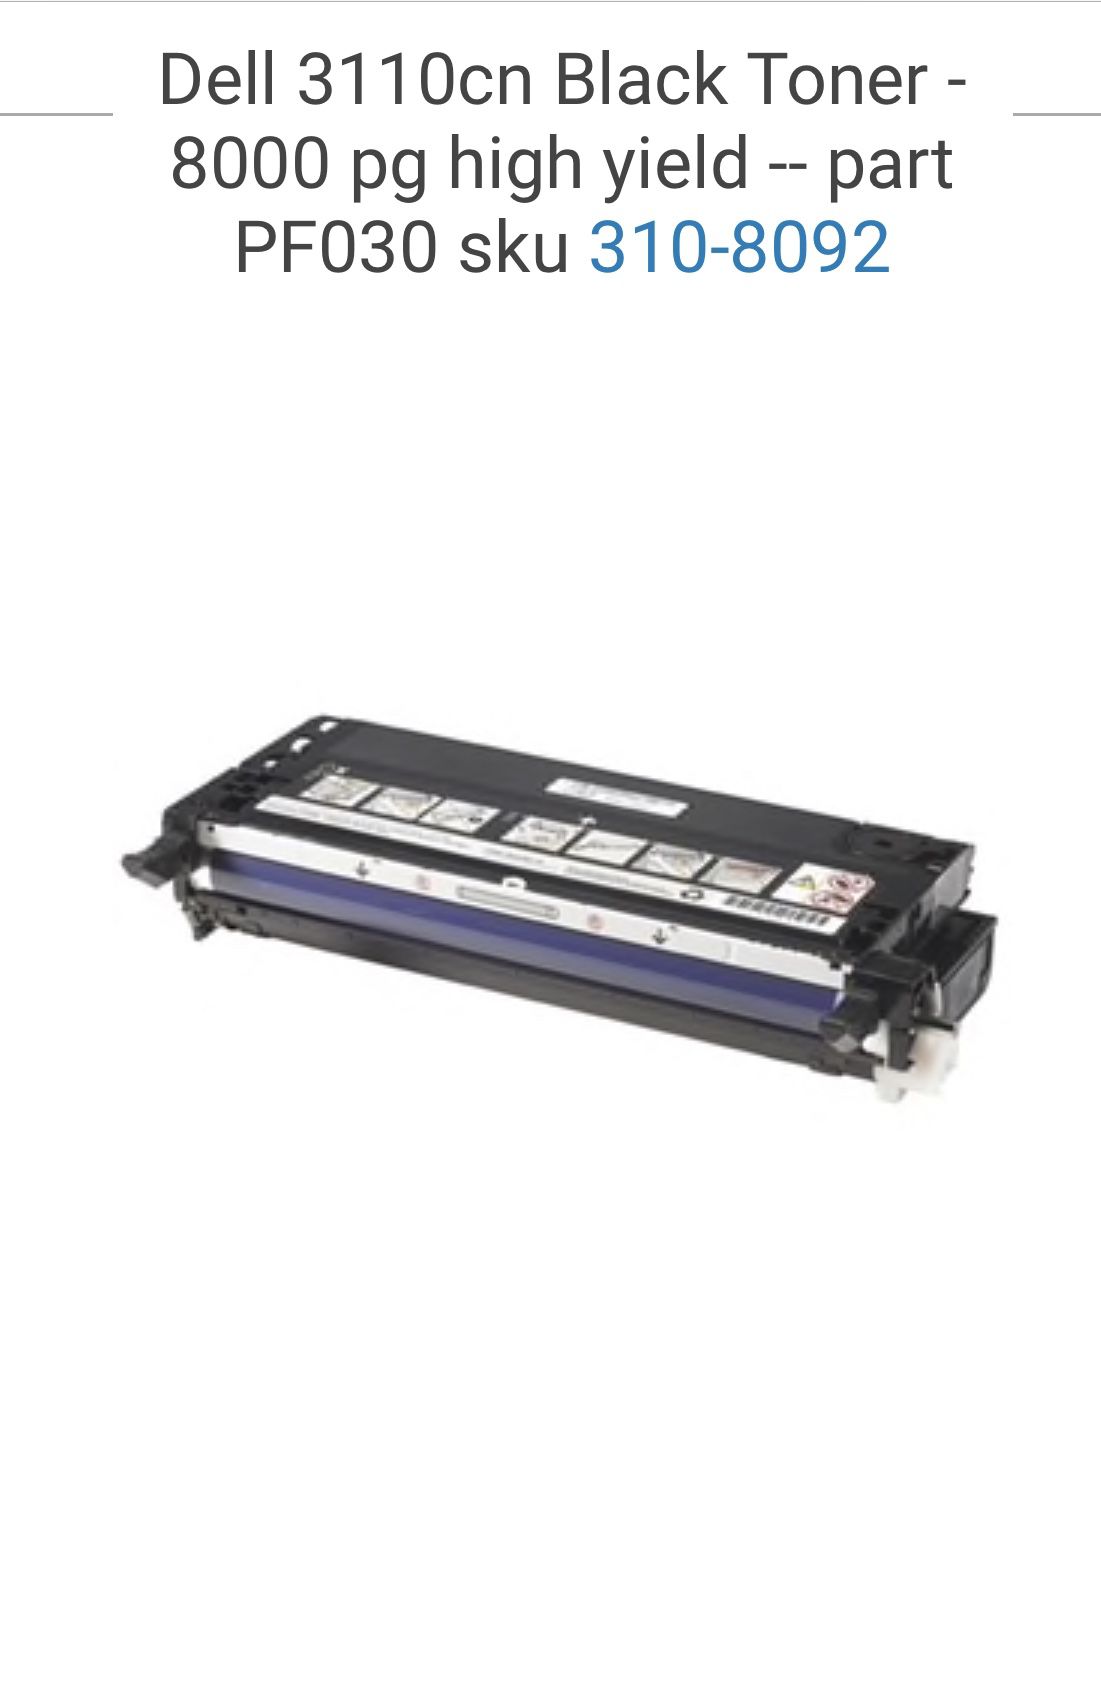 BLACK - Dell 3110cn Toner Cartridges